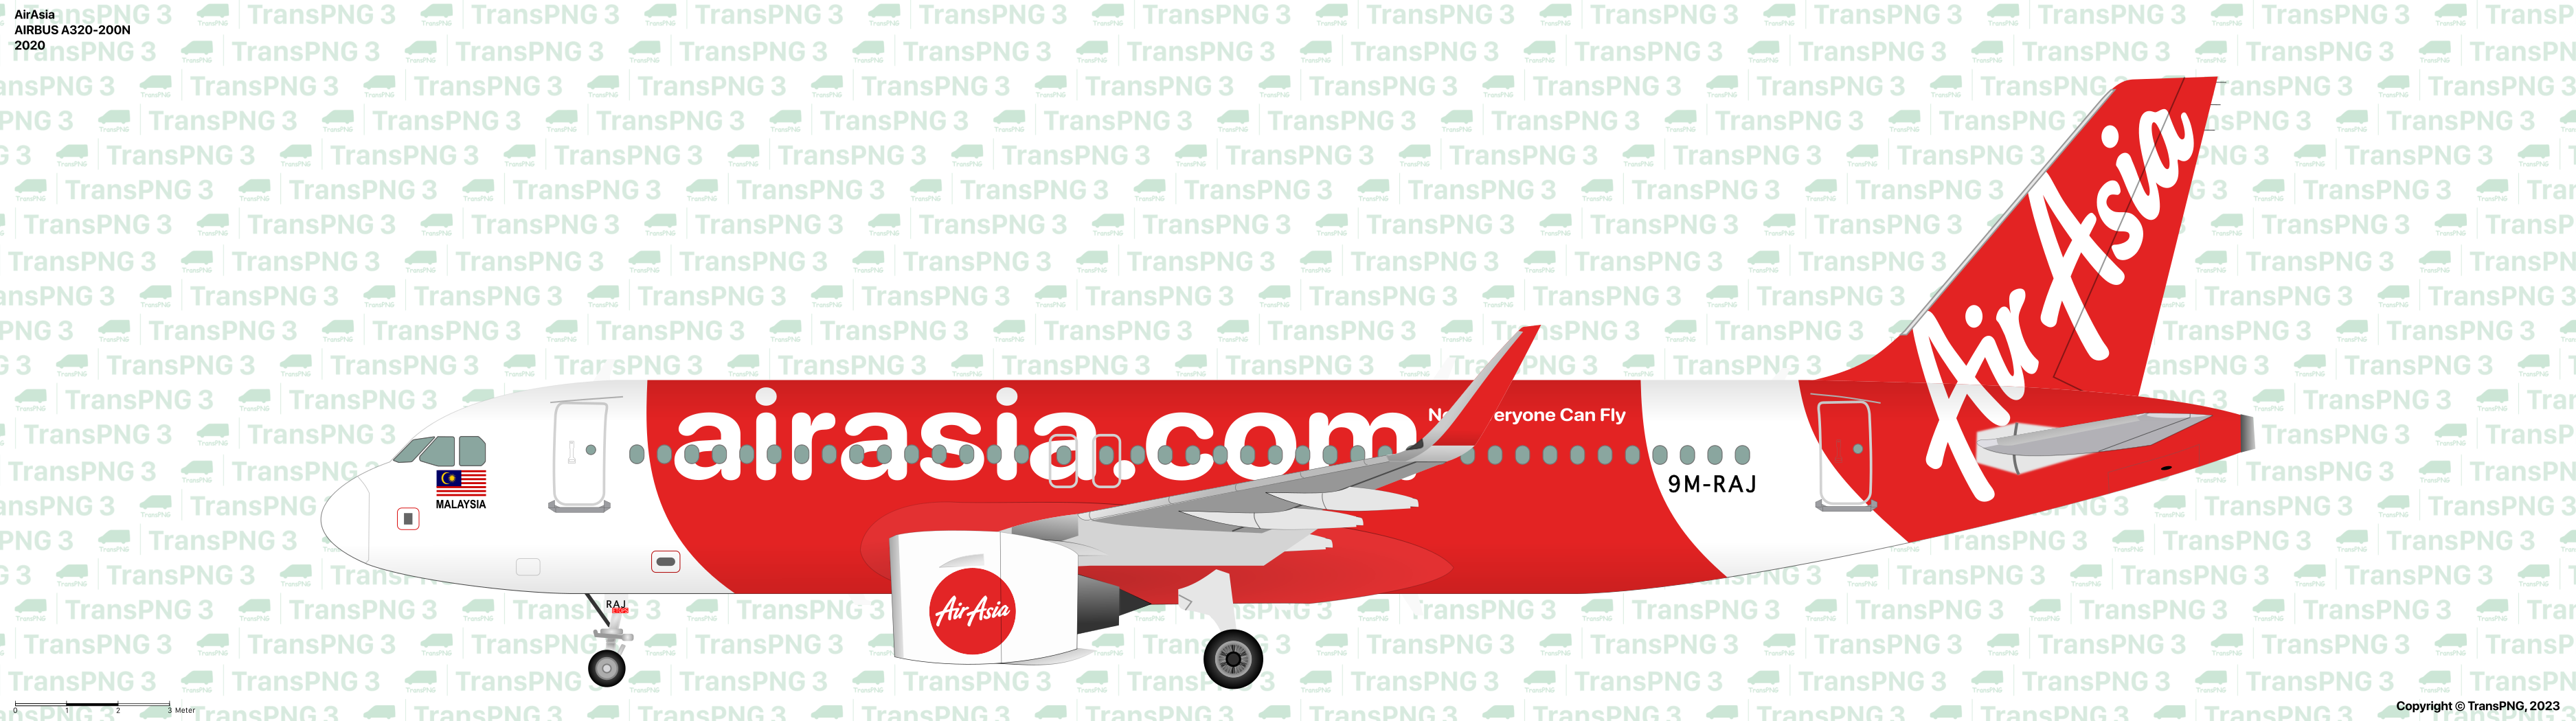 TransPNG.net | 分享世界各地多種交通工具的優秀繪圖 - 客機 53189845922_794d114554_o